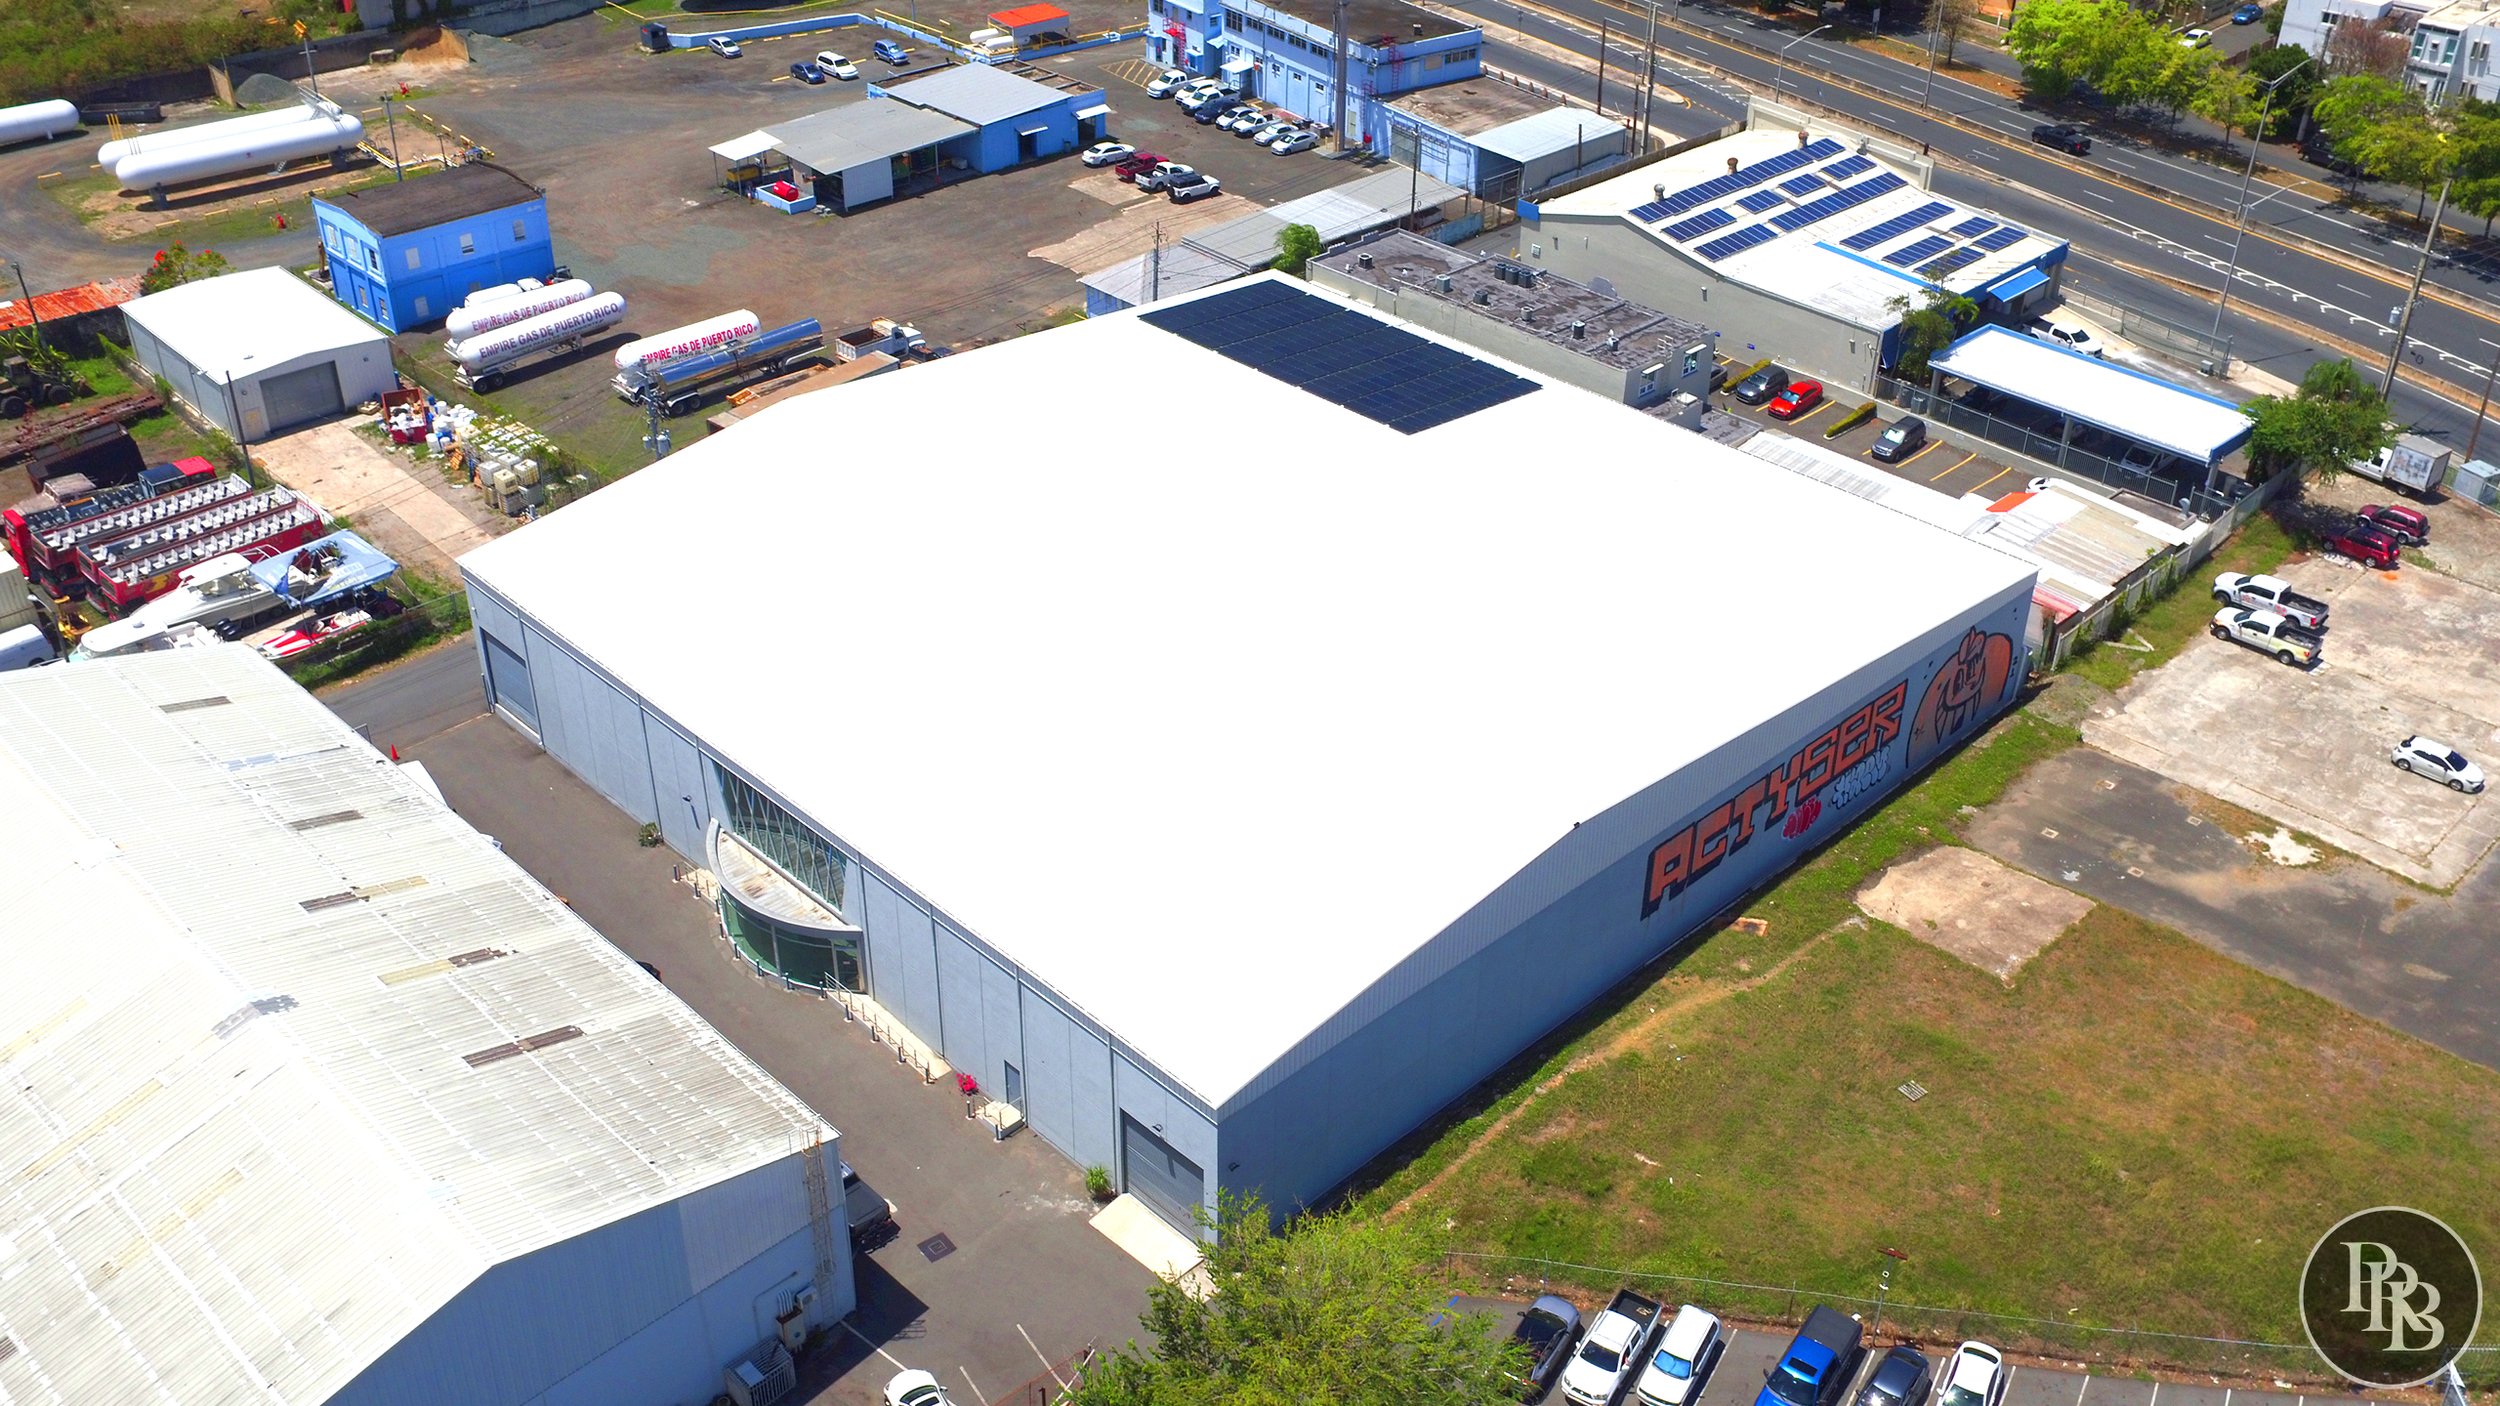 Miramar 41,000 sqft warehouse PRB logo #6.jpg